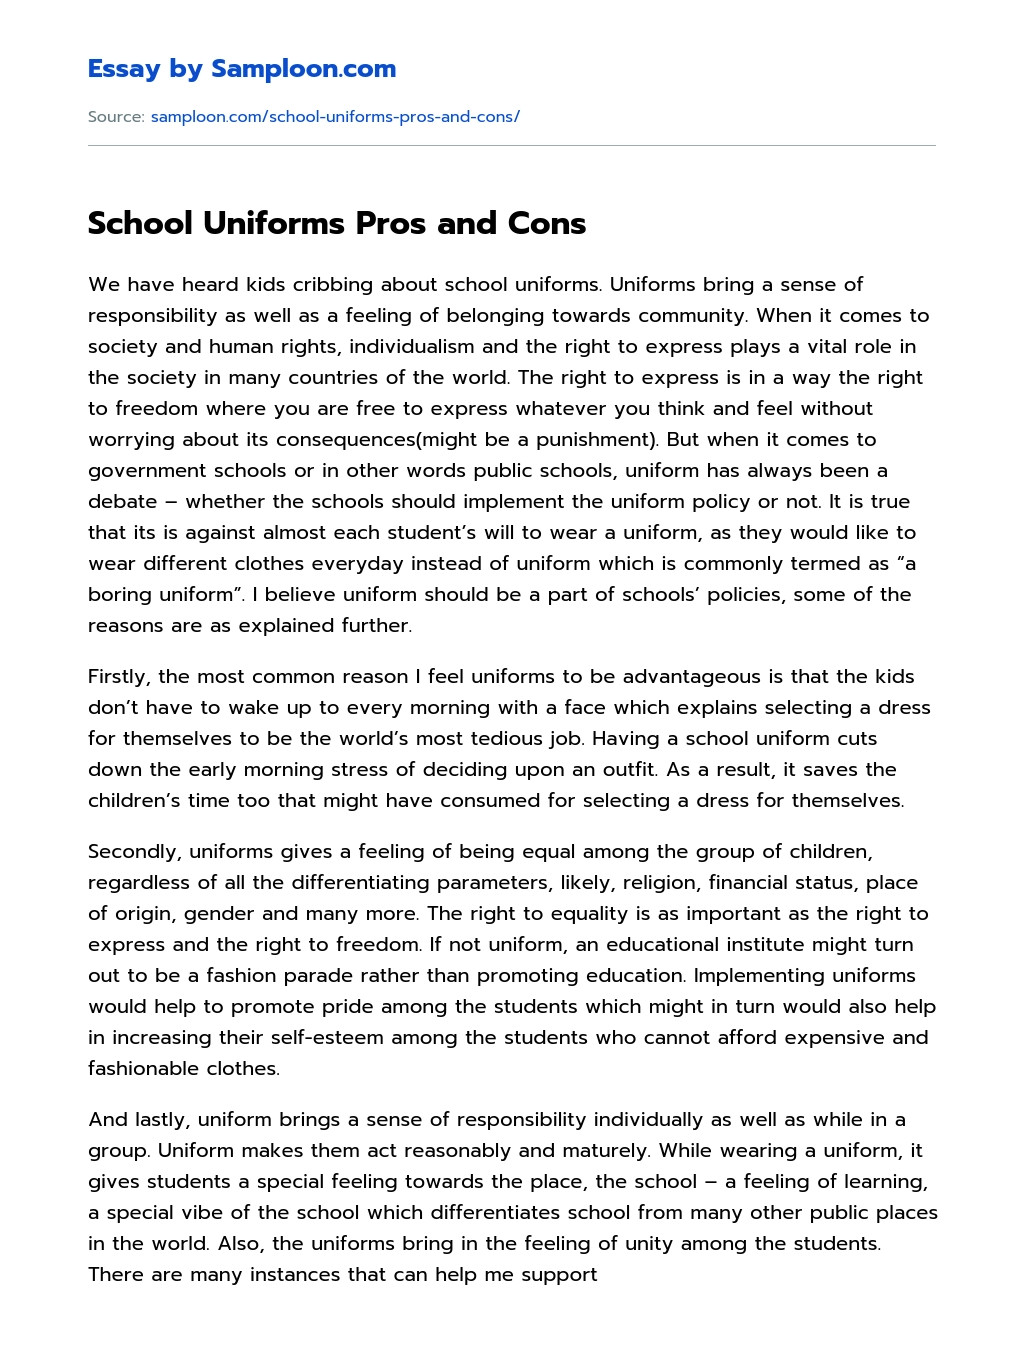 School Uniforms Pros and Cons essay